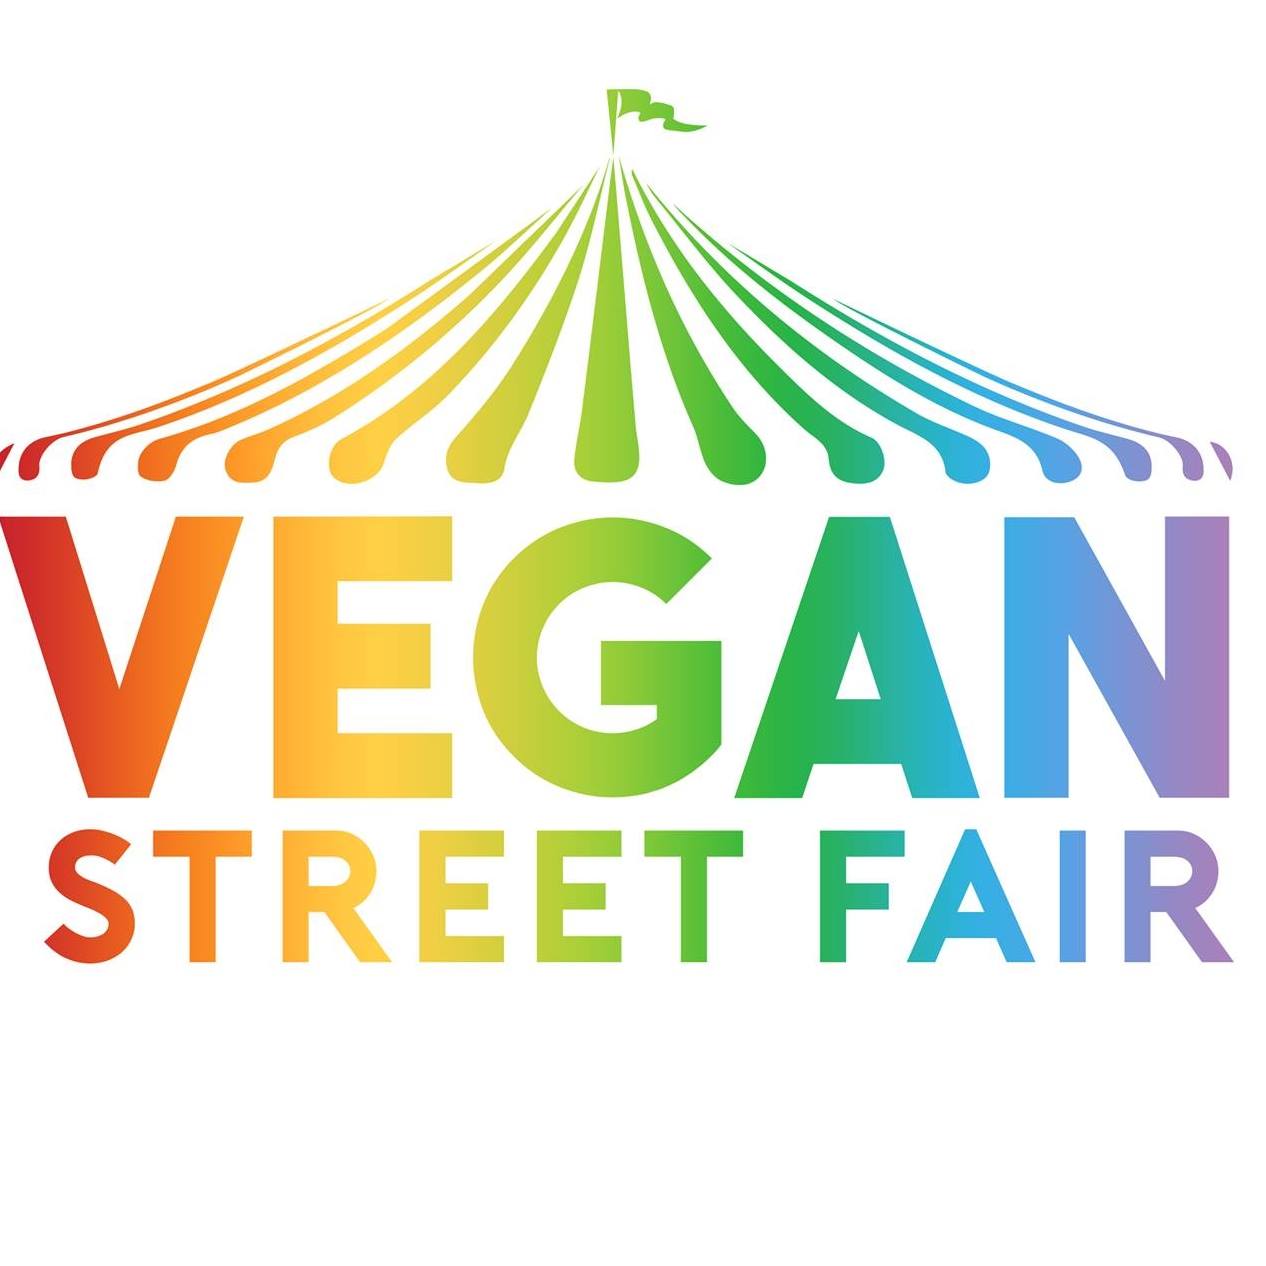 Vegan Street Fair